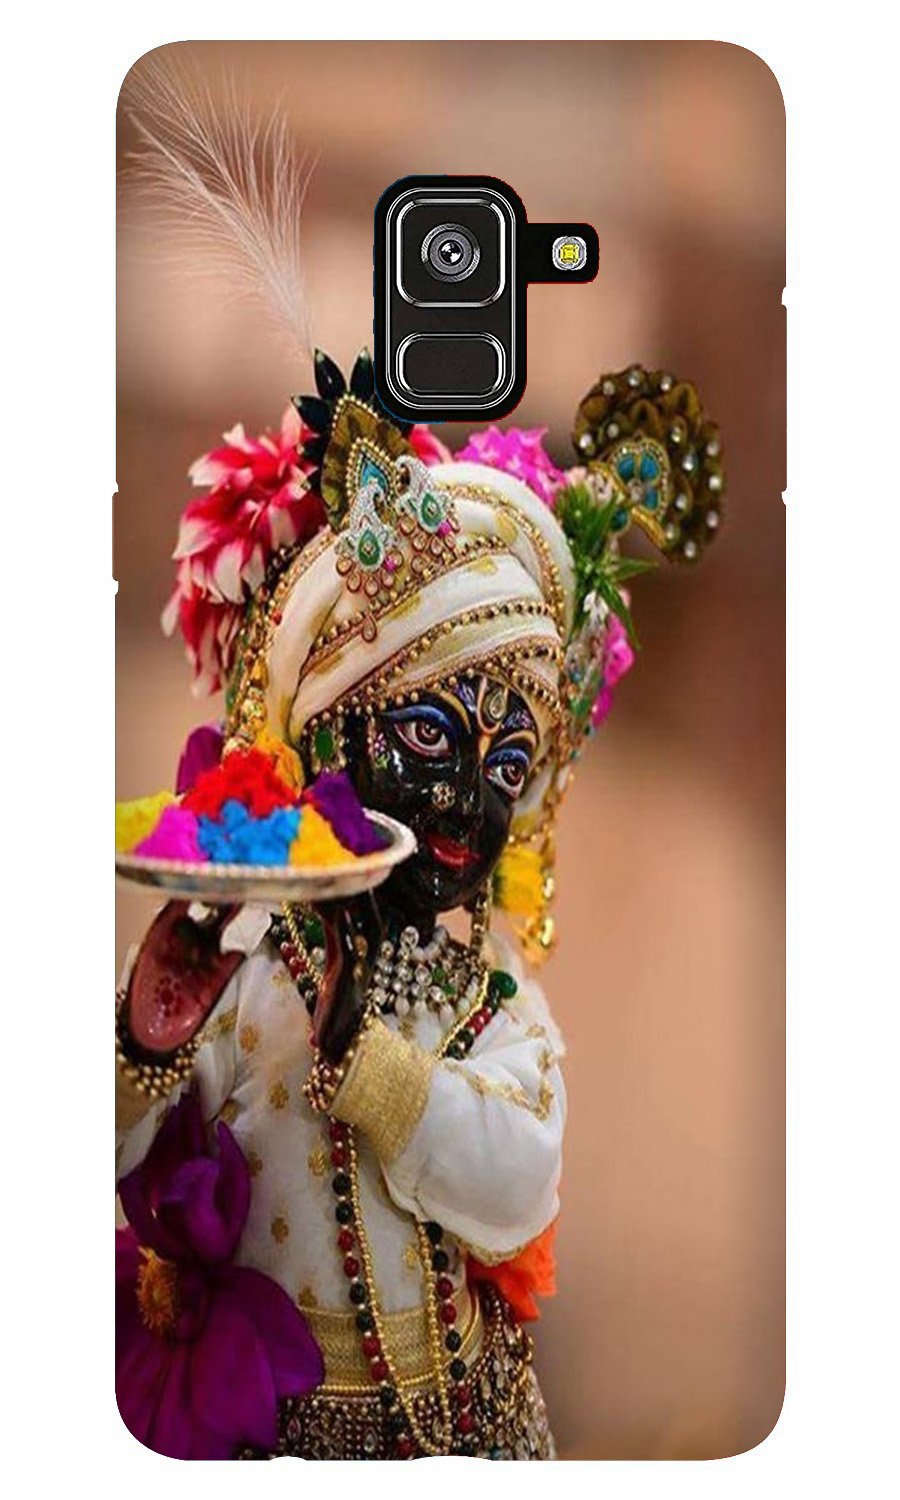 Lord Krishna2 Case for Galaxy A5 (2018)